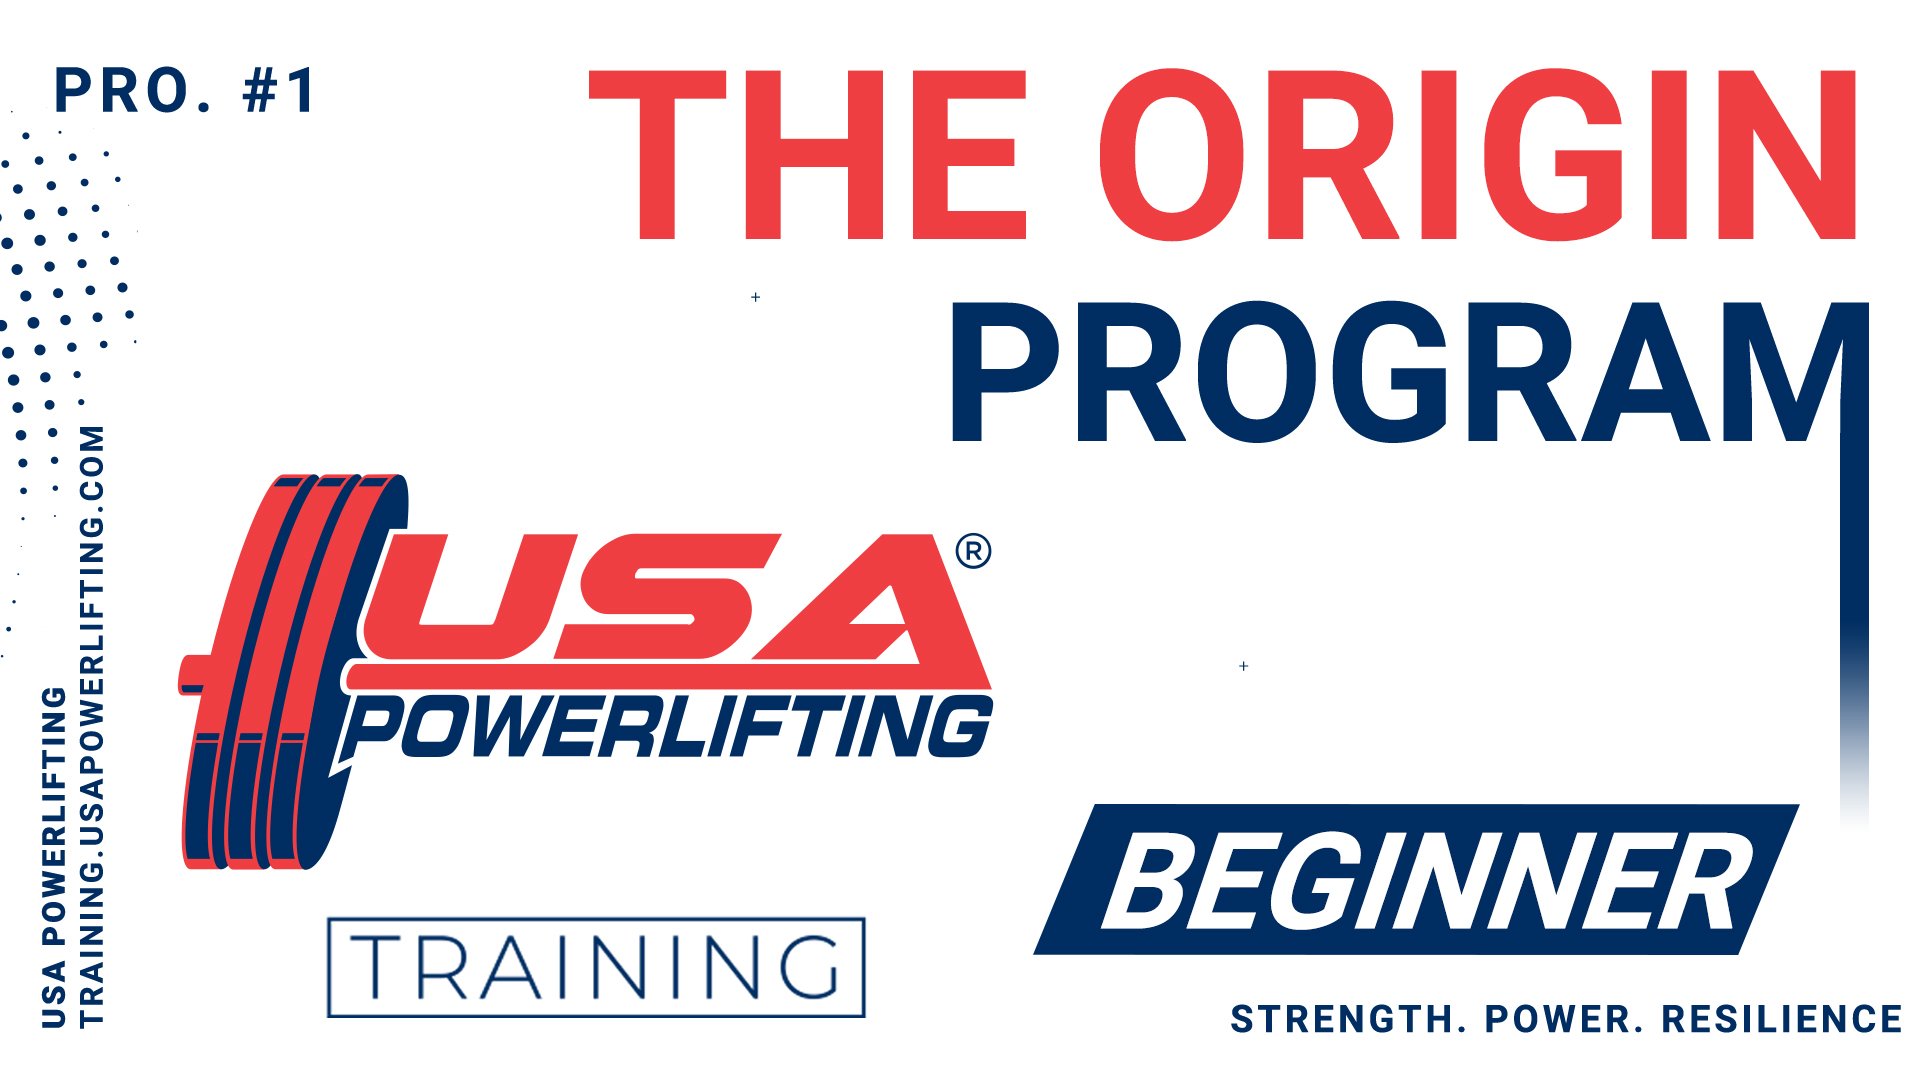 the origin powerlifting program